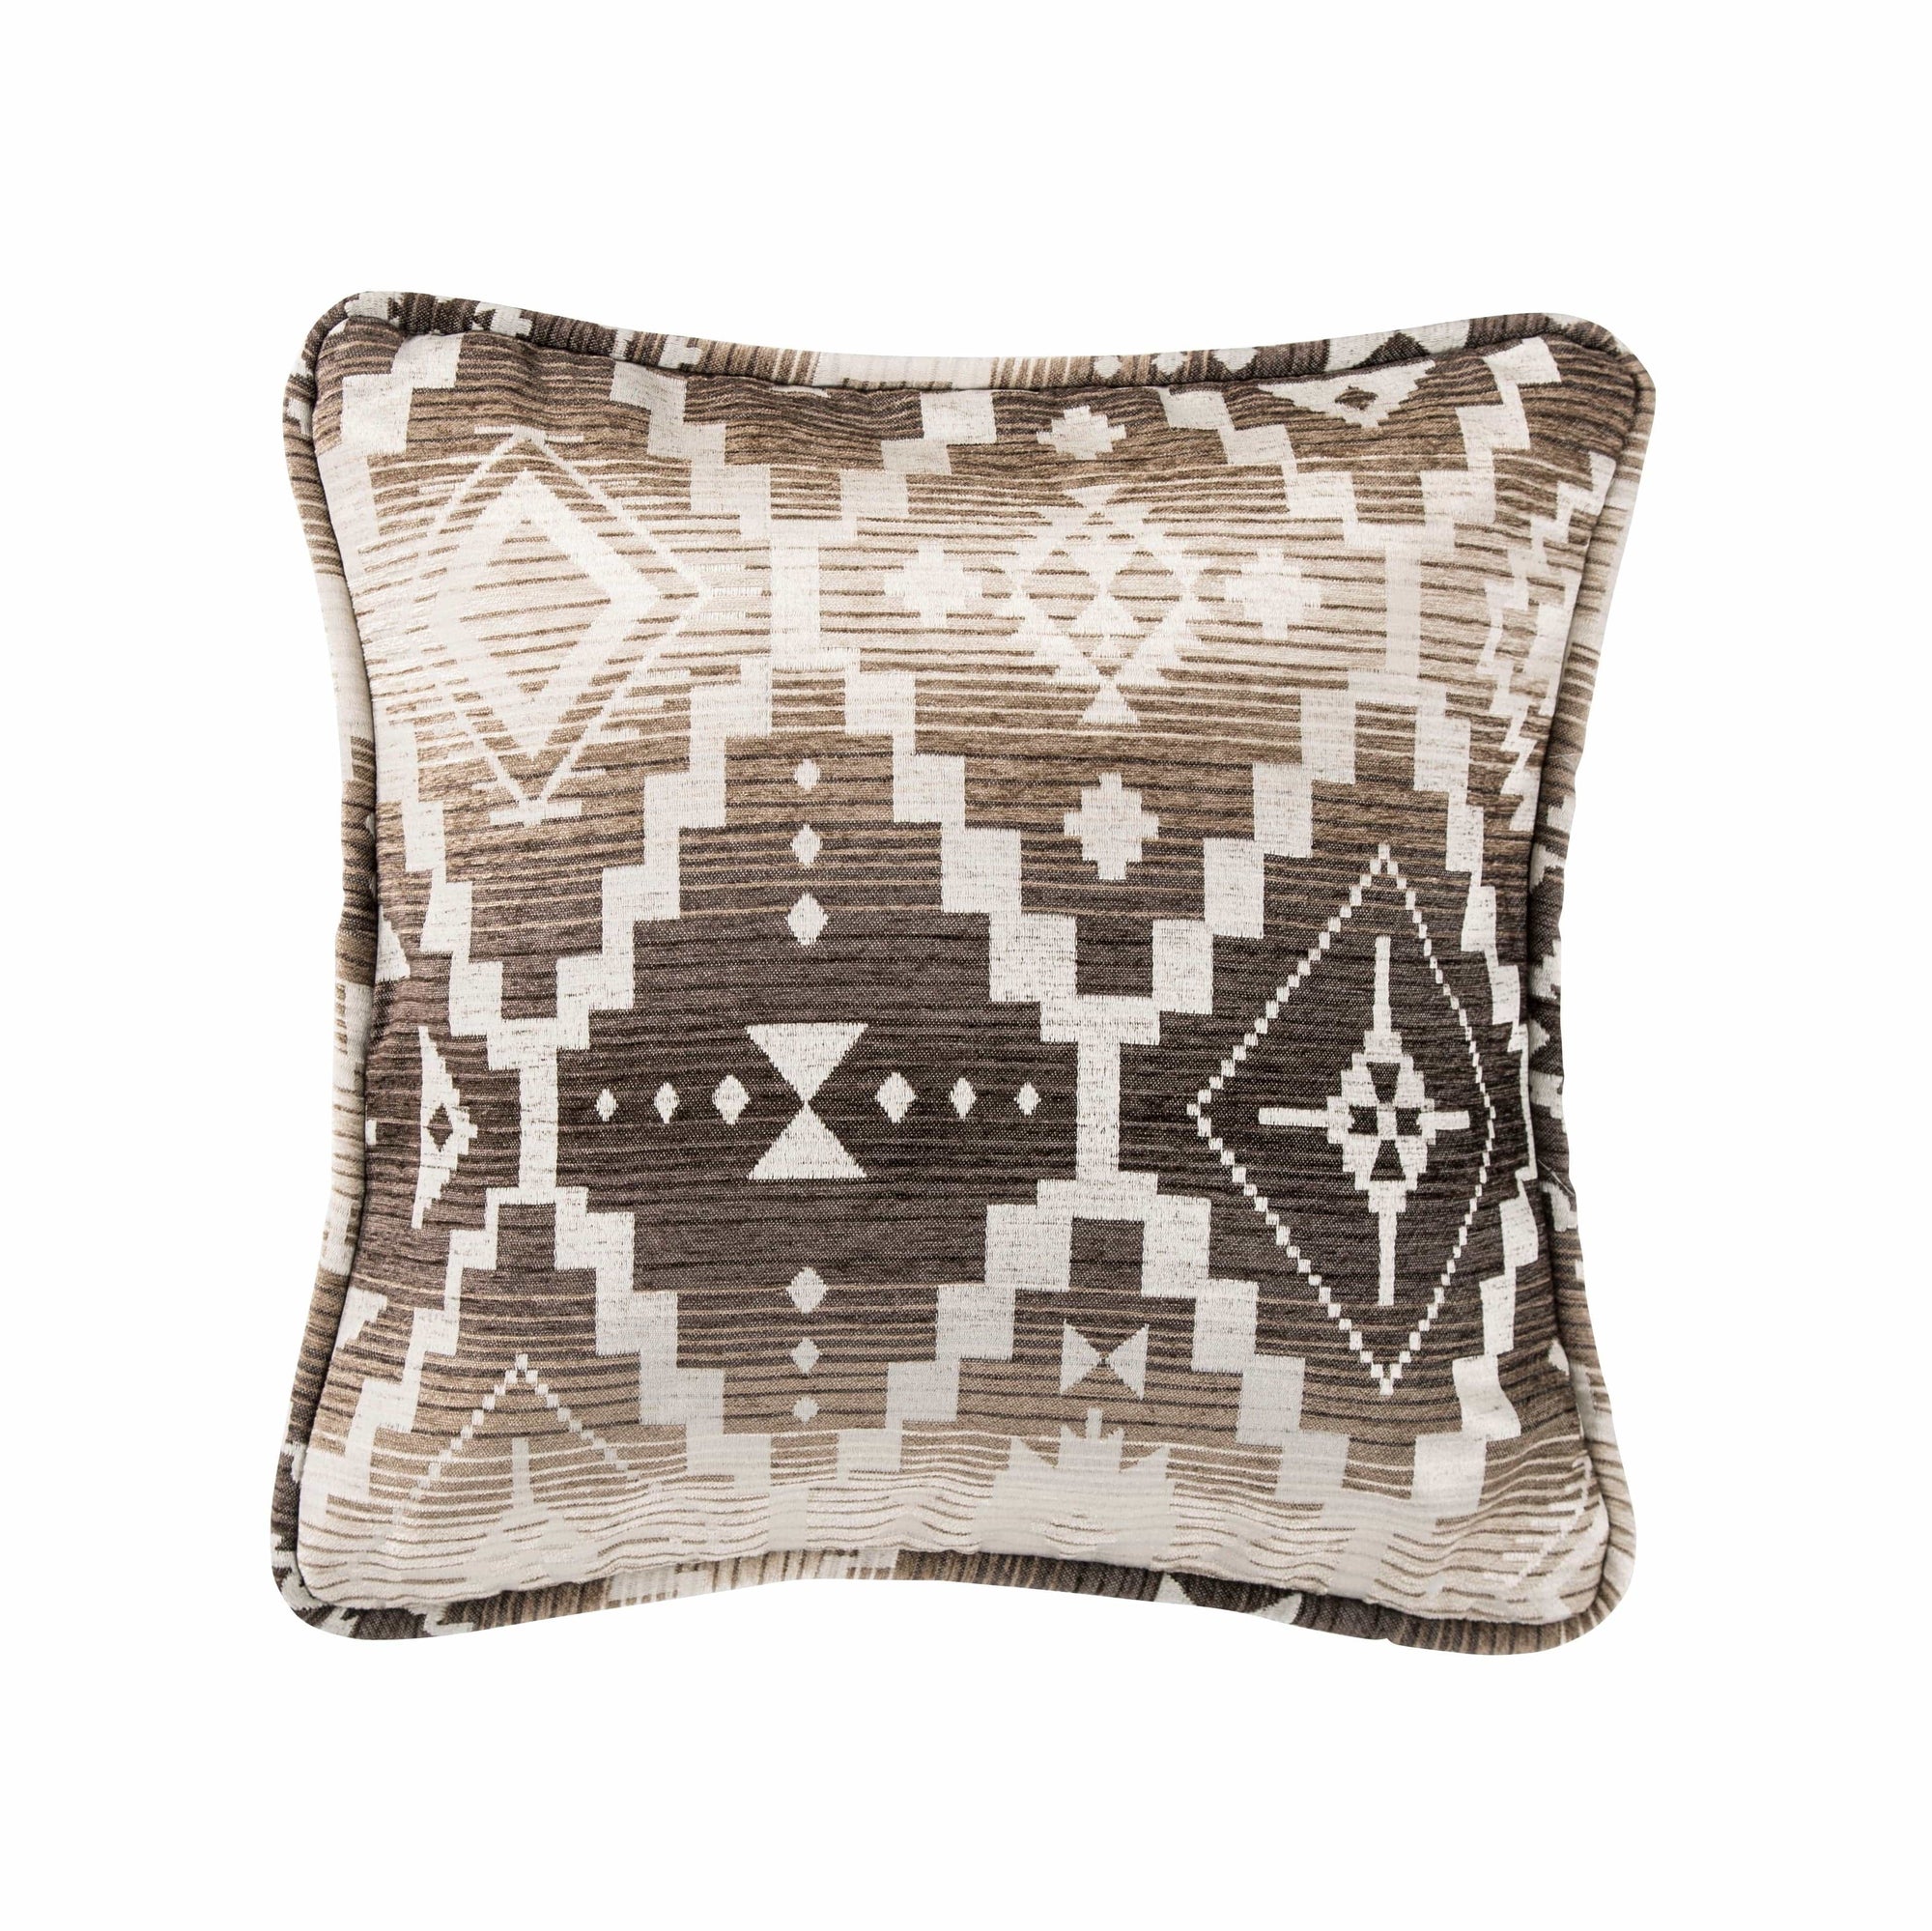 Chalet Square Aztec Throw Pillow, 18x18 Pillow